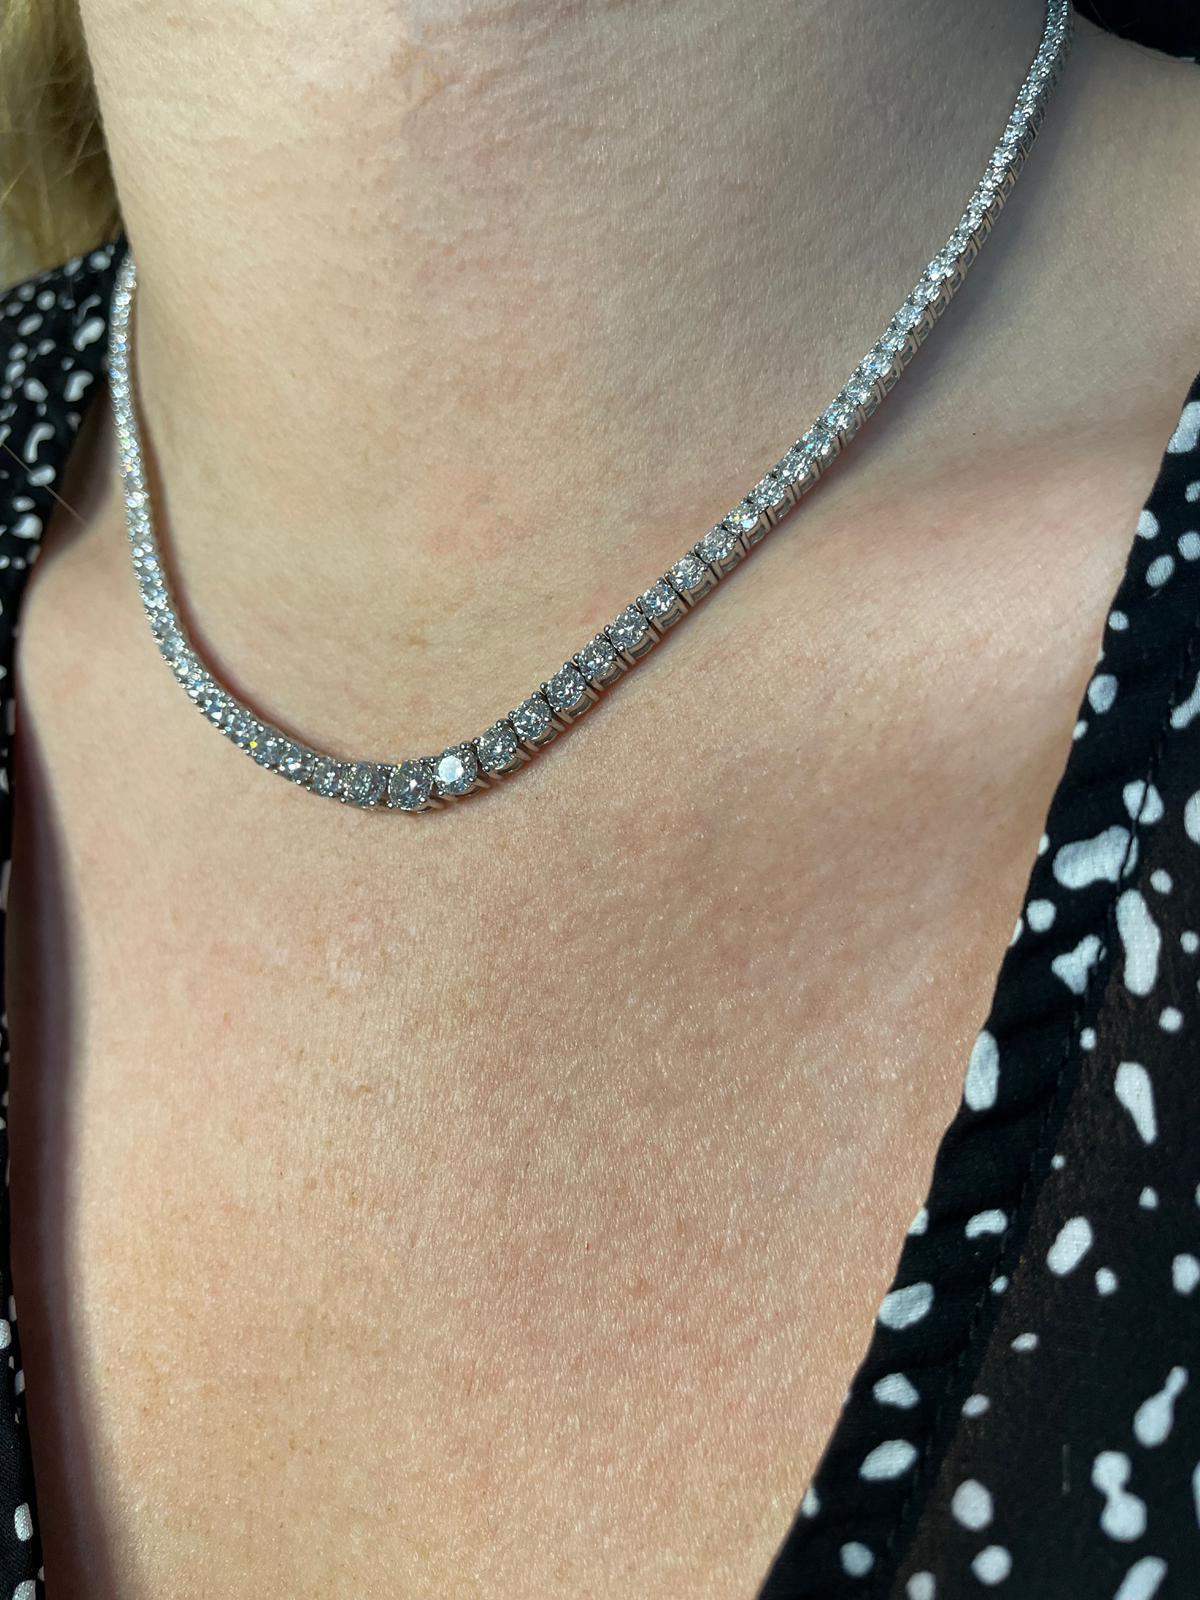 12 carat tennis necklace